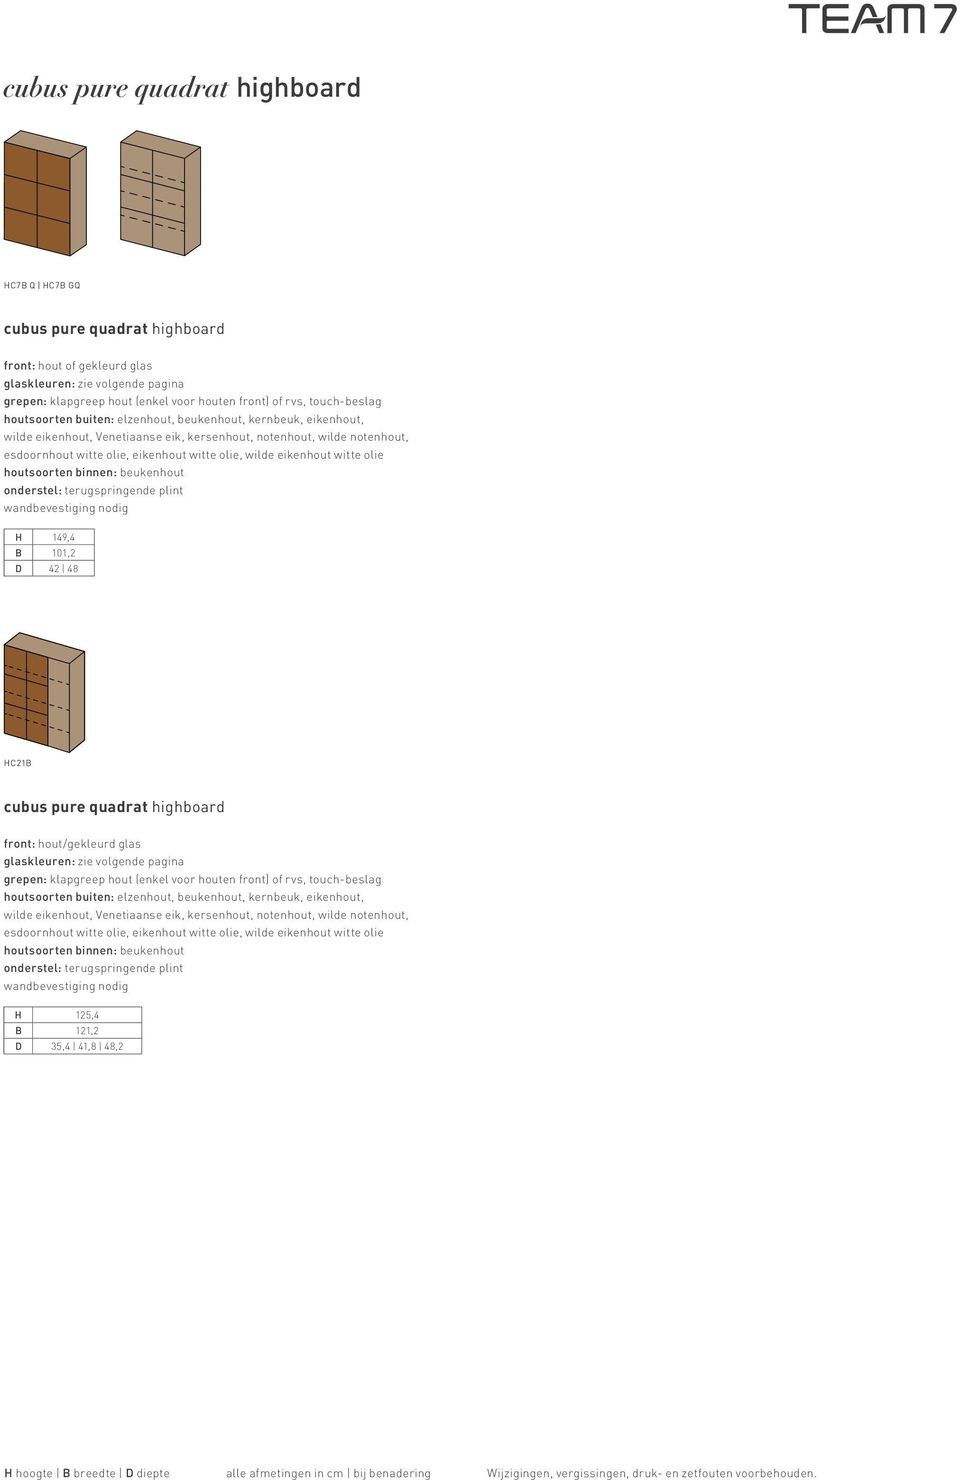 touch-beslag H 149,4 B 101,2 D 42 48 HC21B cubus pure quadrat highboard grepen: